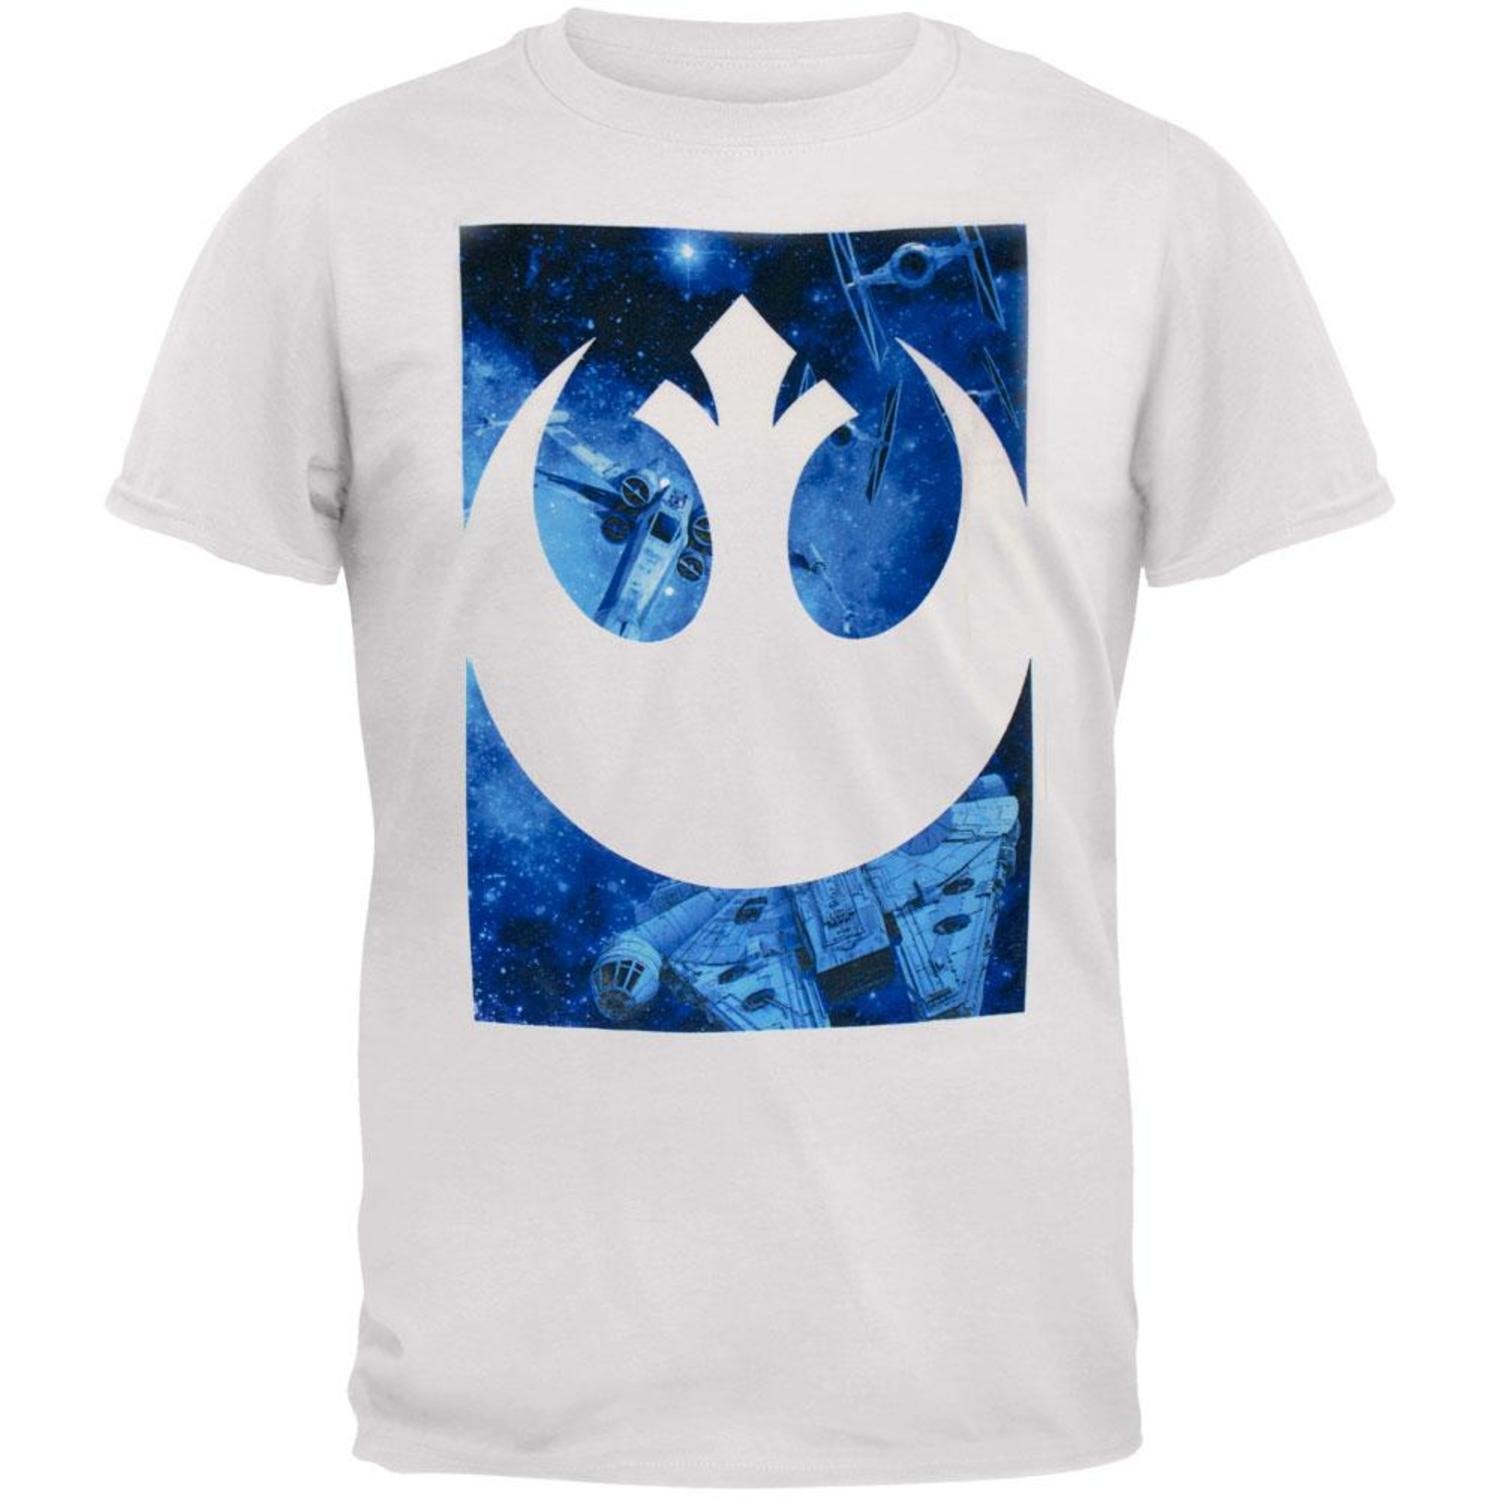 Star Wars Mens T-Shirt - White Rebel Symbol Over X-Wing Tie Fighter Battle